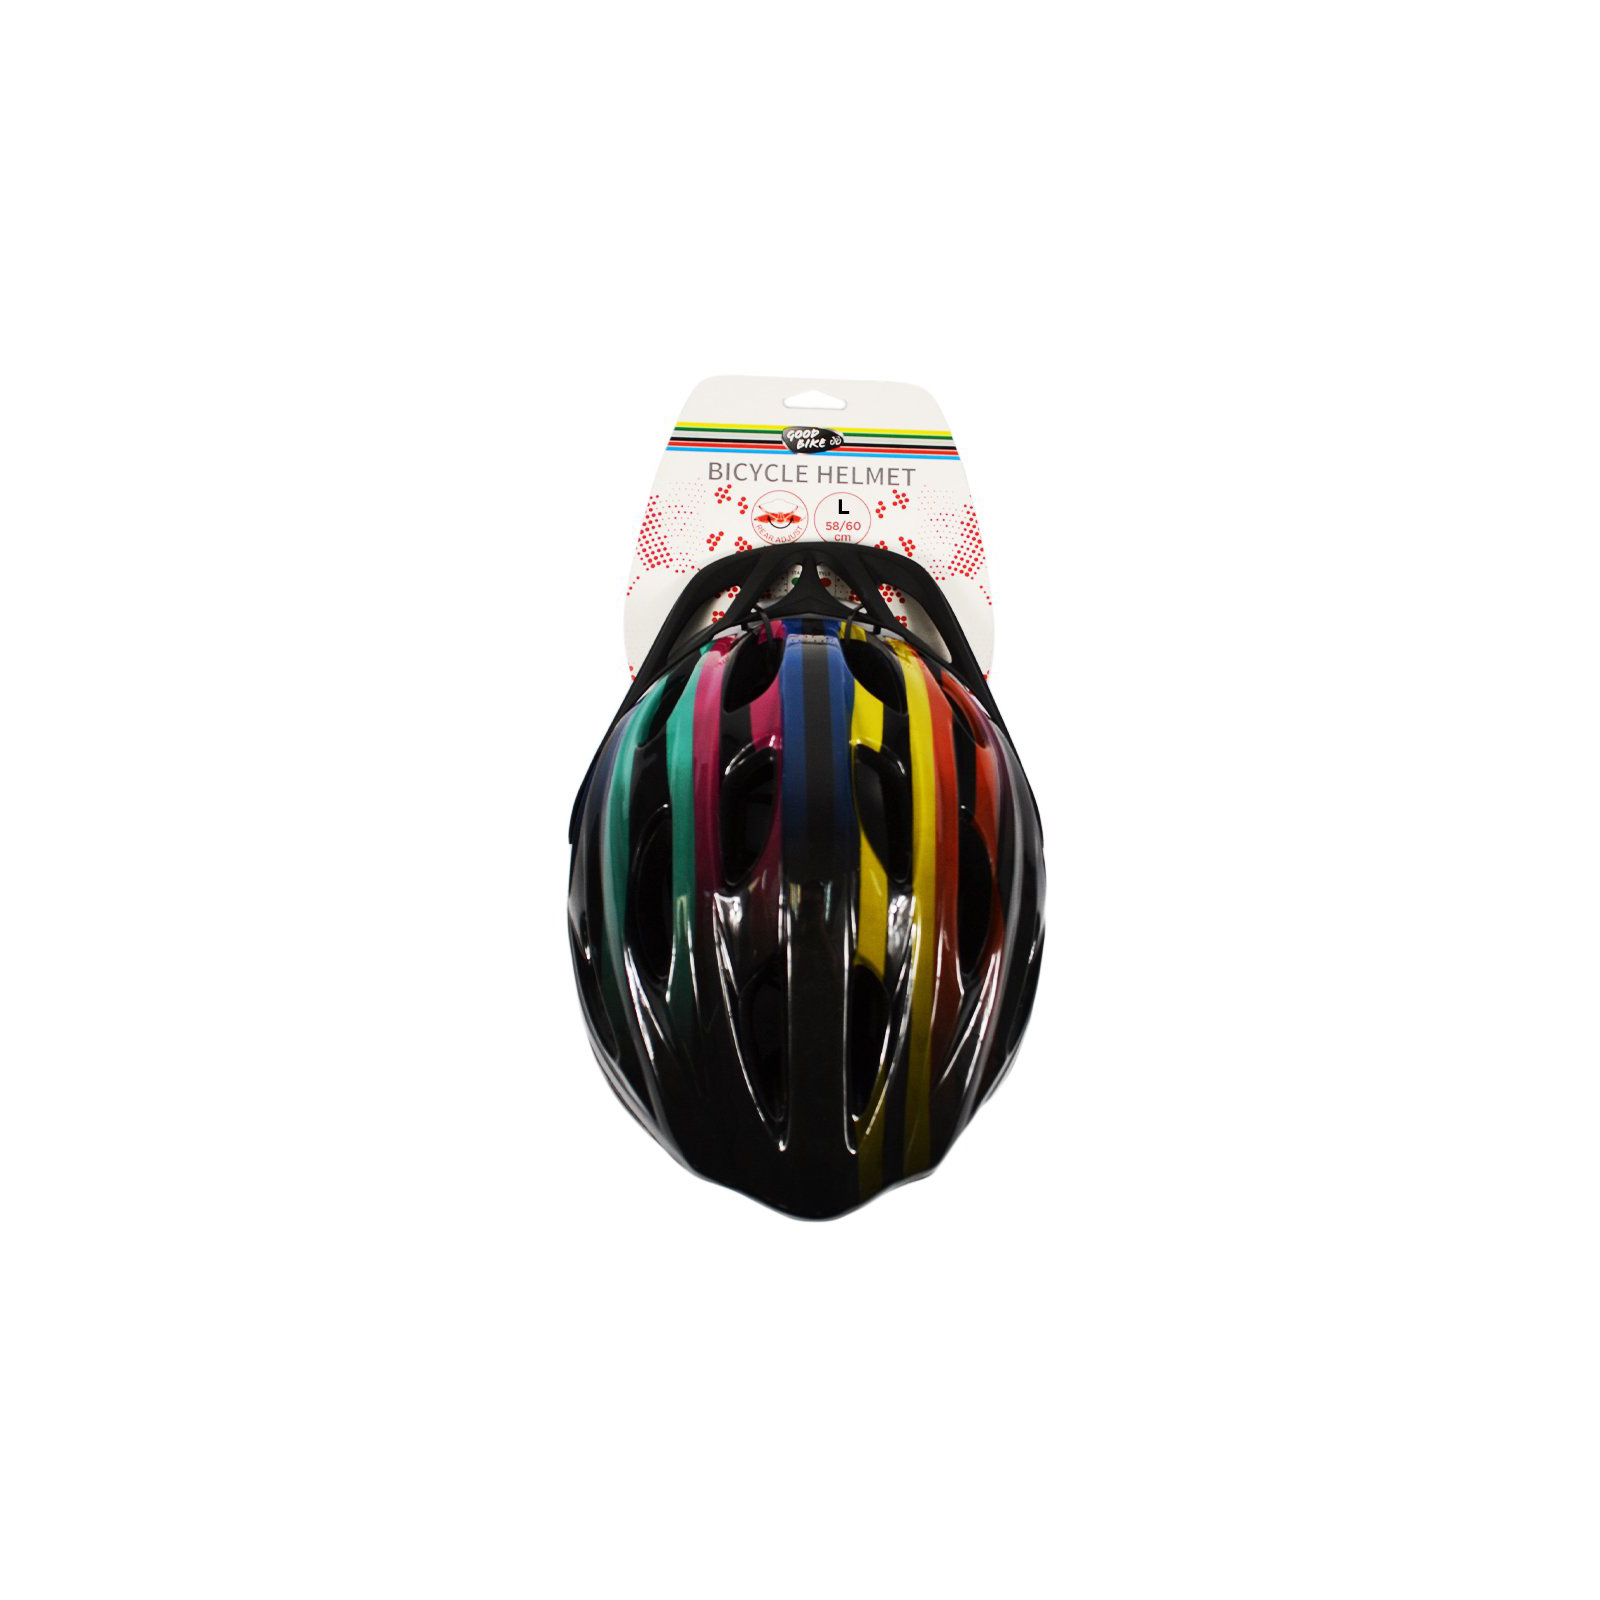 Шлем Good Bike L 58-60 см Grey/Red (88855/5-IS) изображение 6